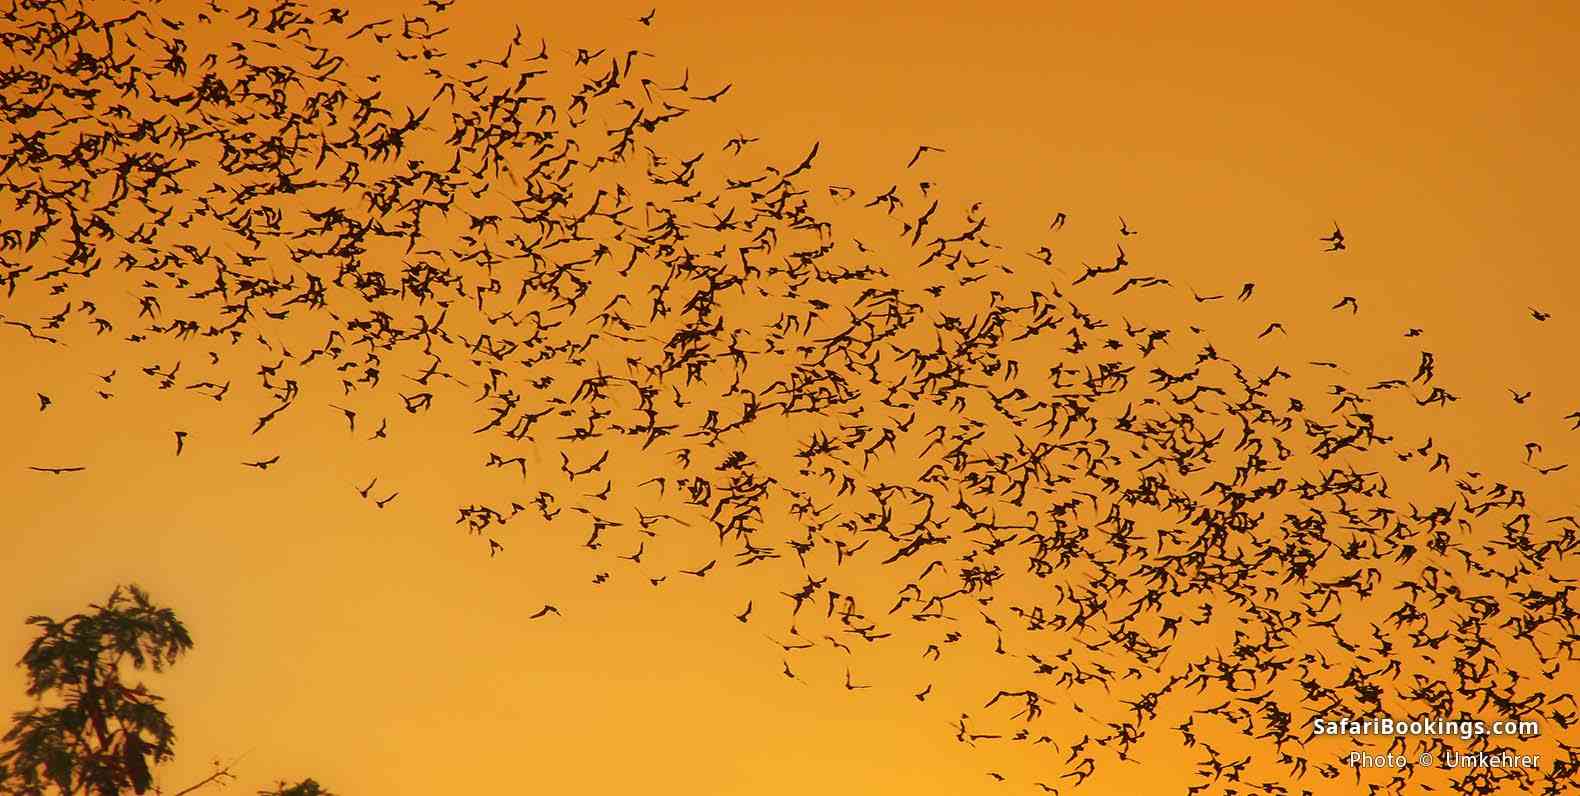 Bat colony in the sky at dusk